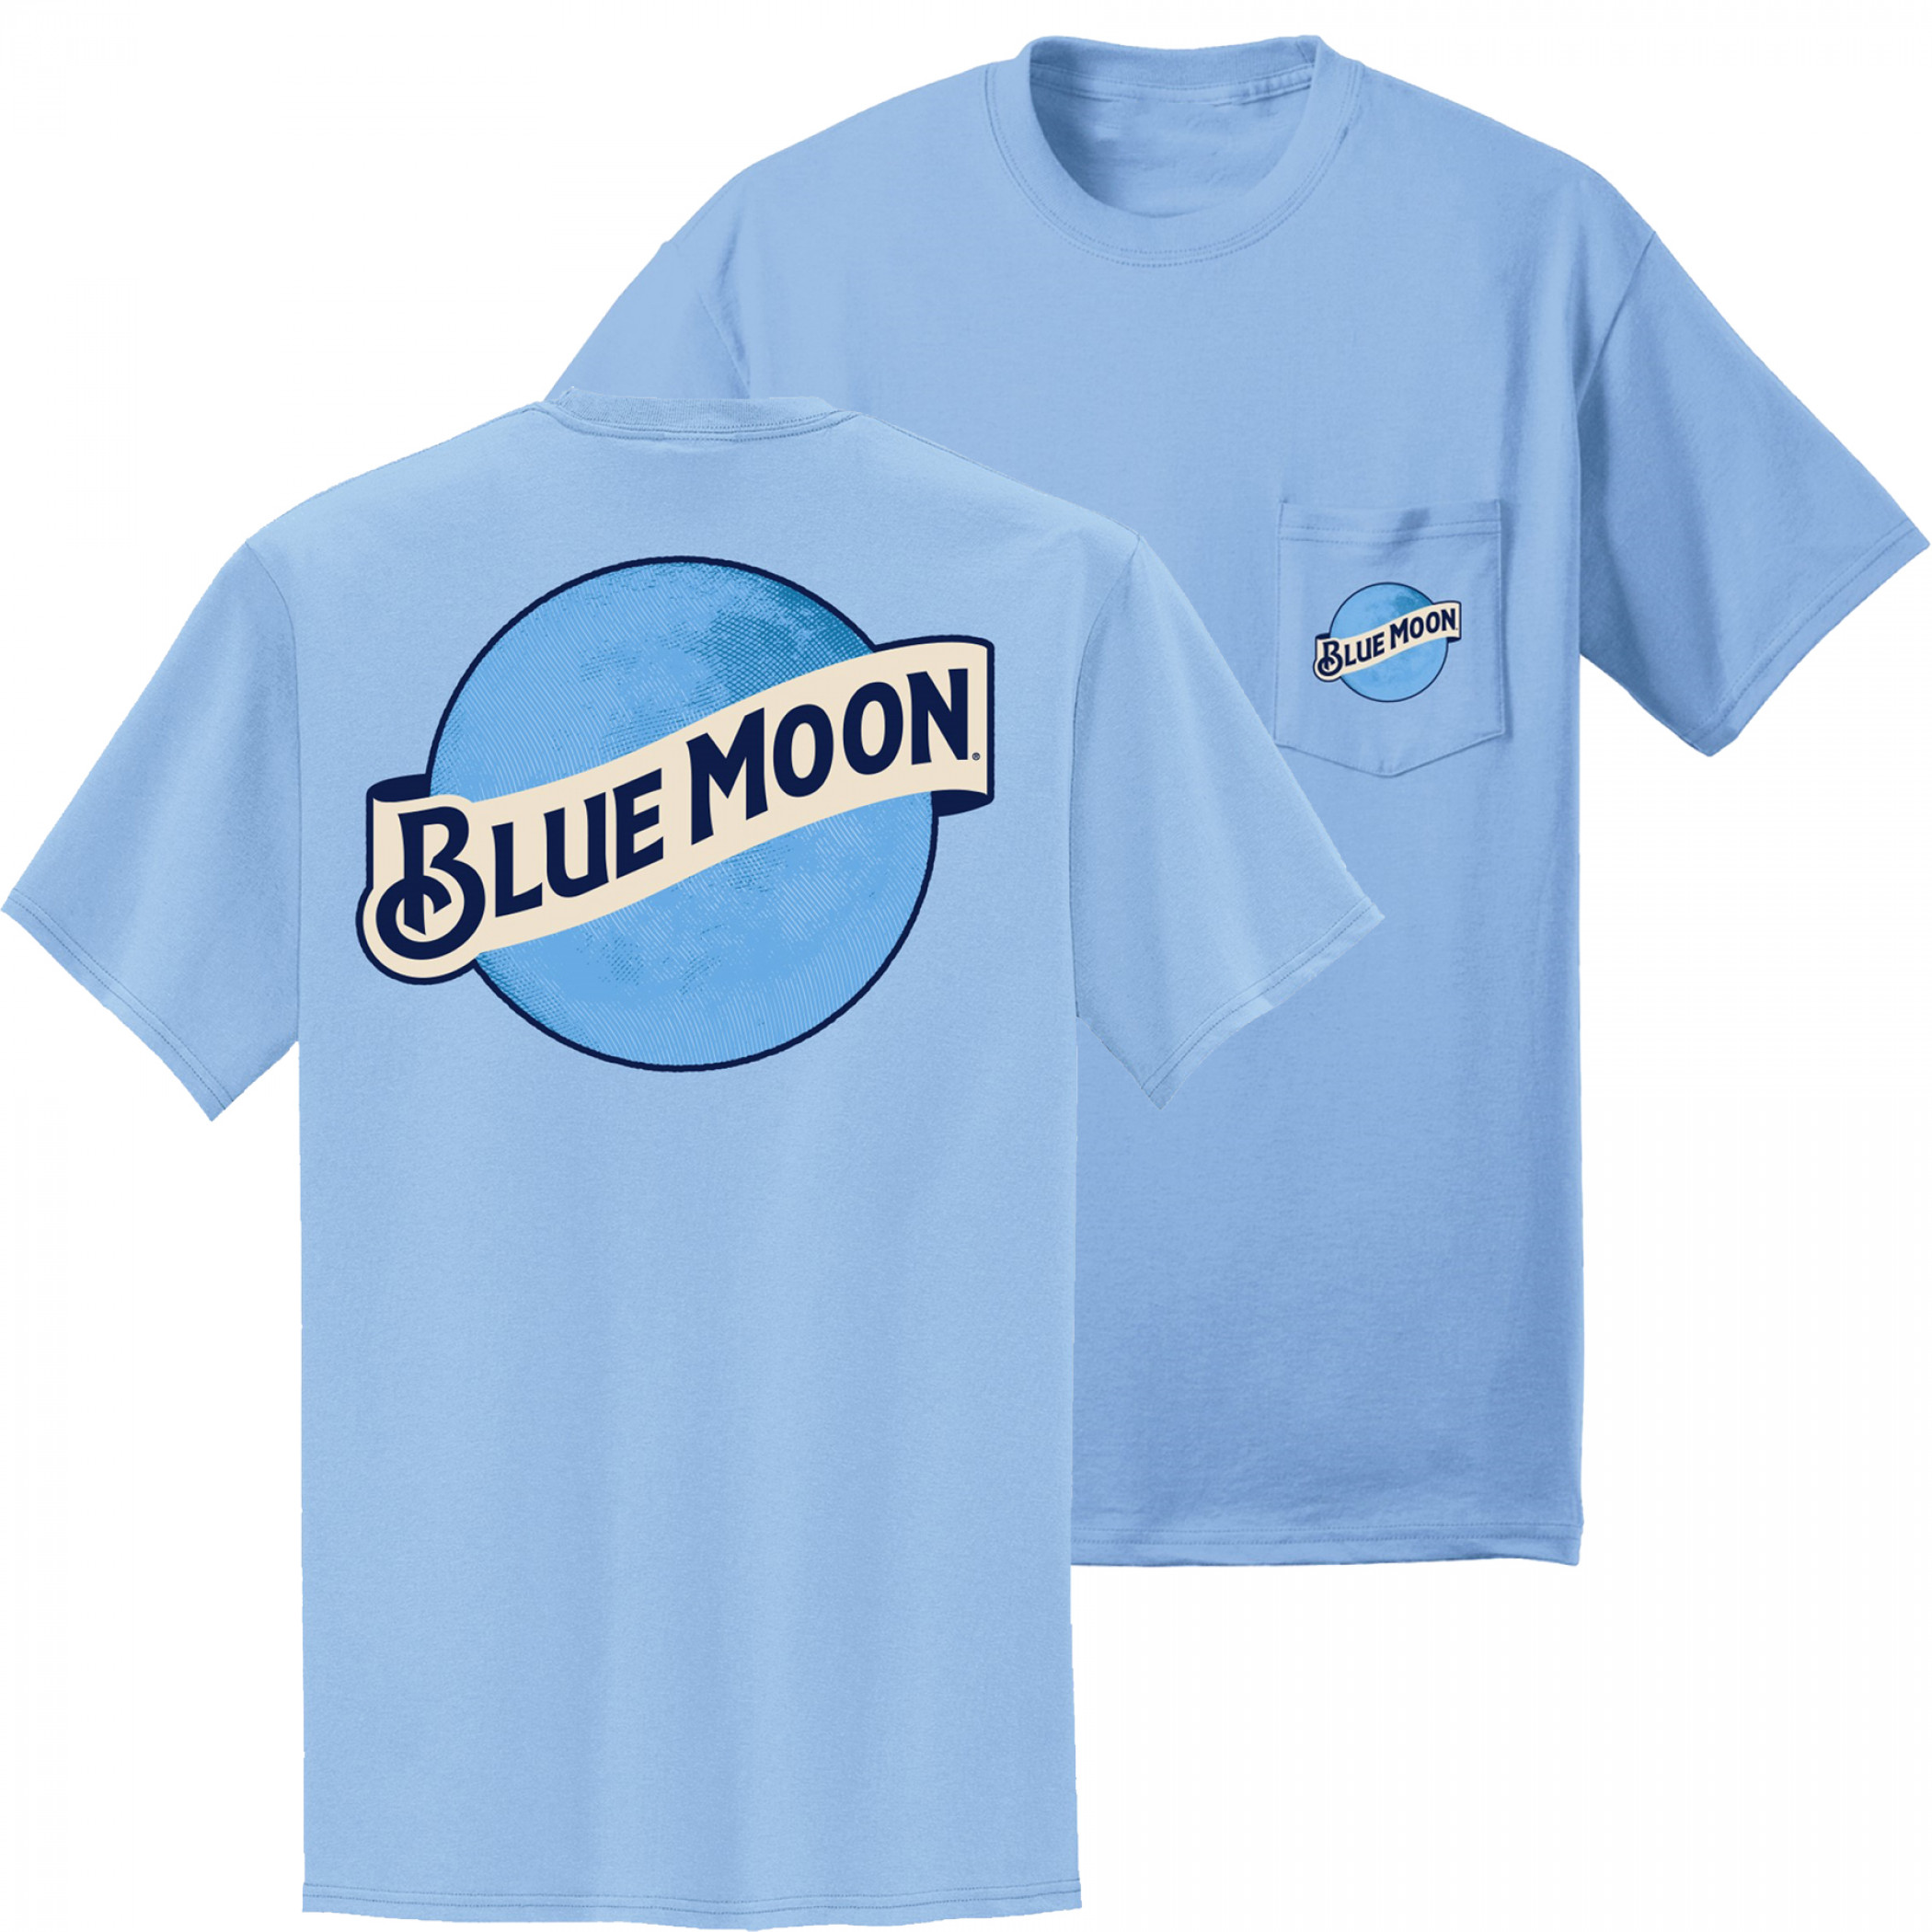 Blue Moon Front and Back Logo Printed Pocket T-Shirt